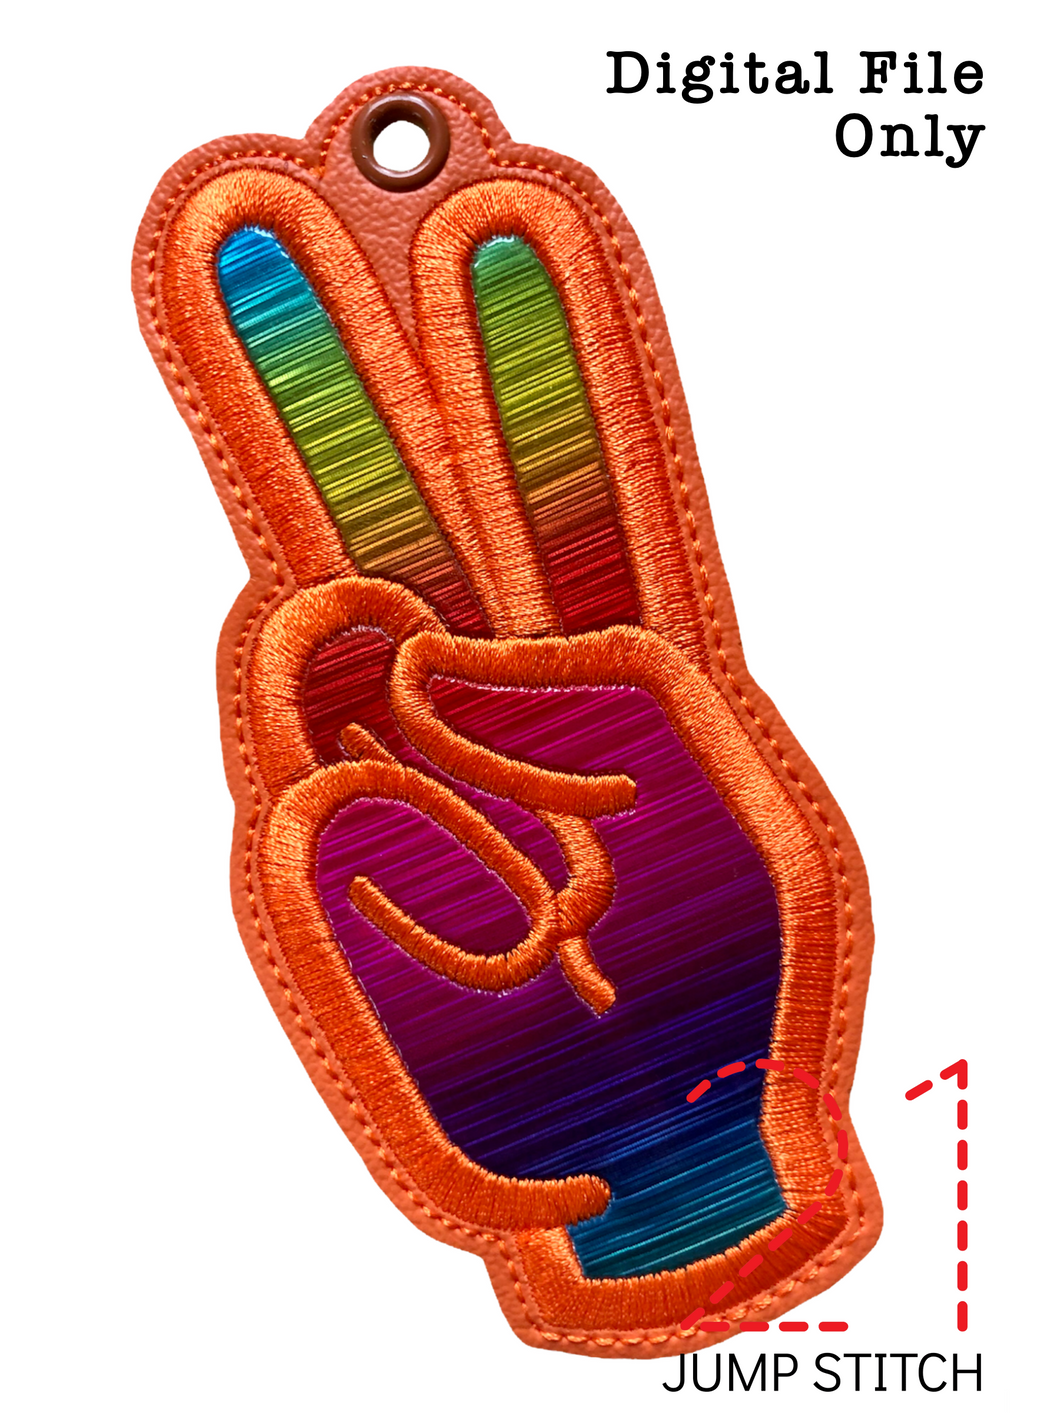 “V” Sign Language Ornament